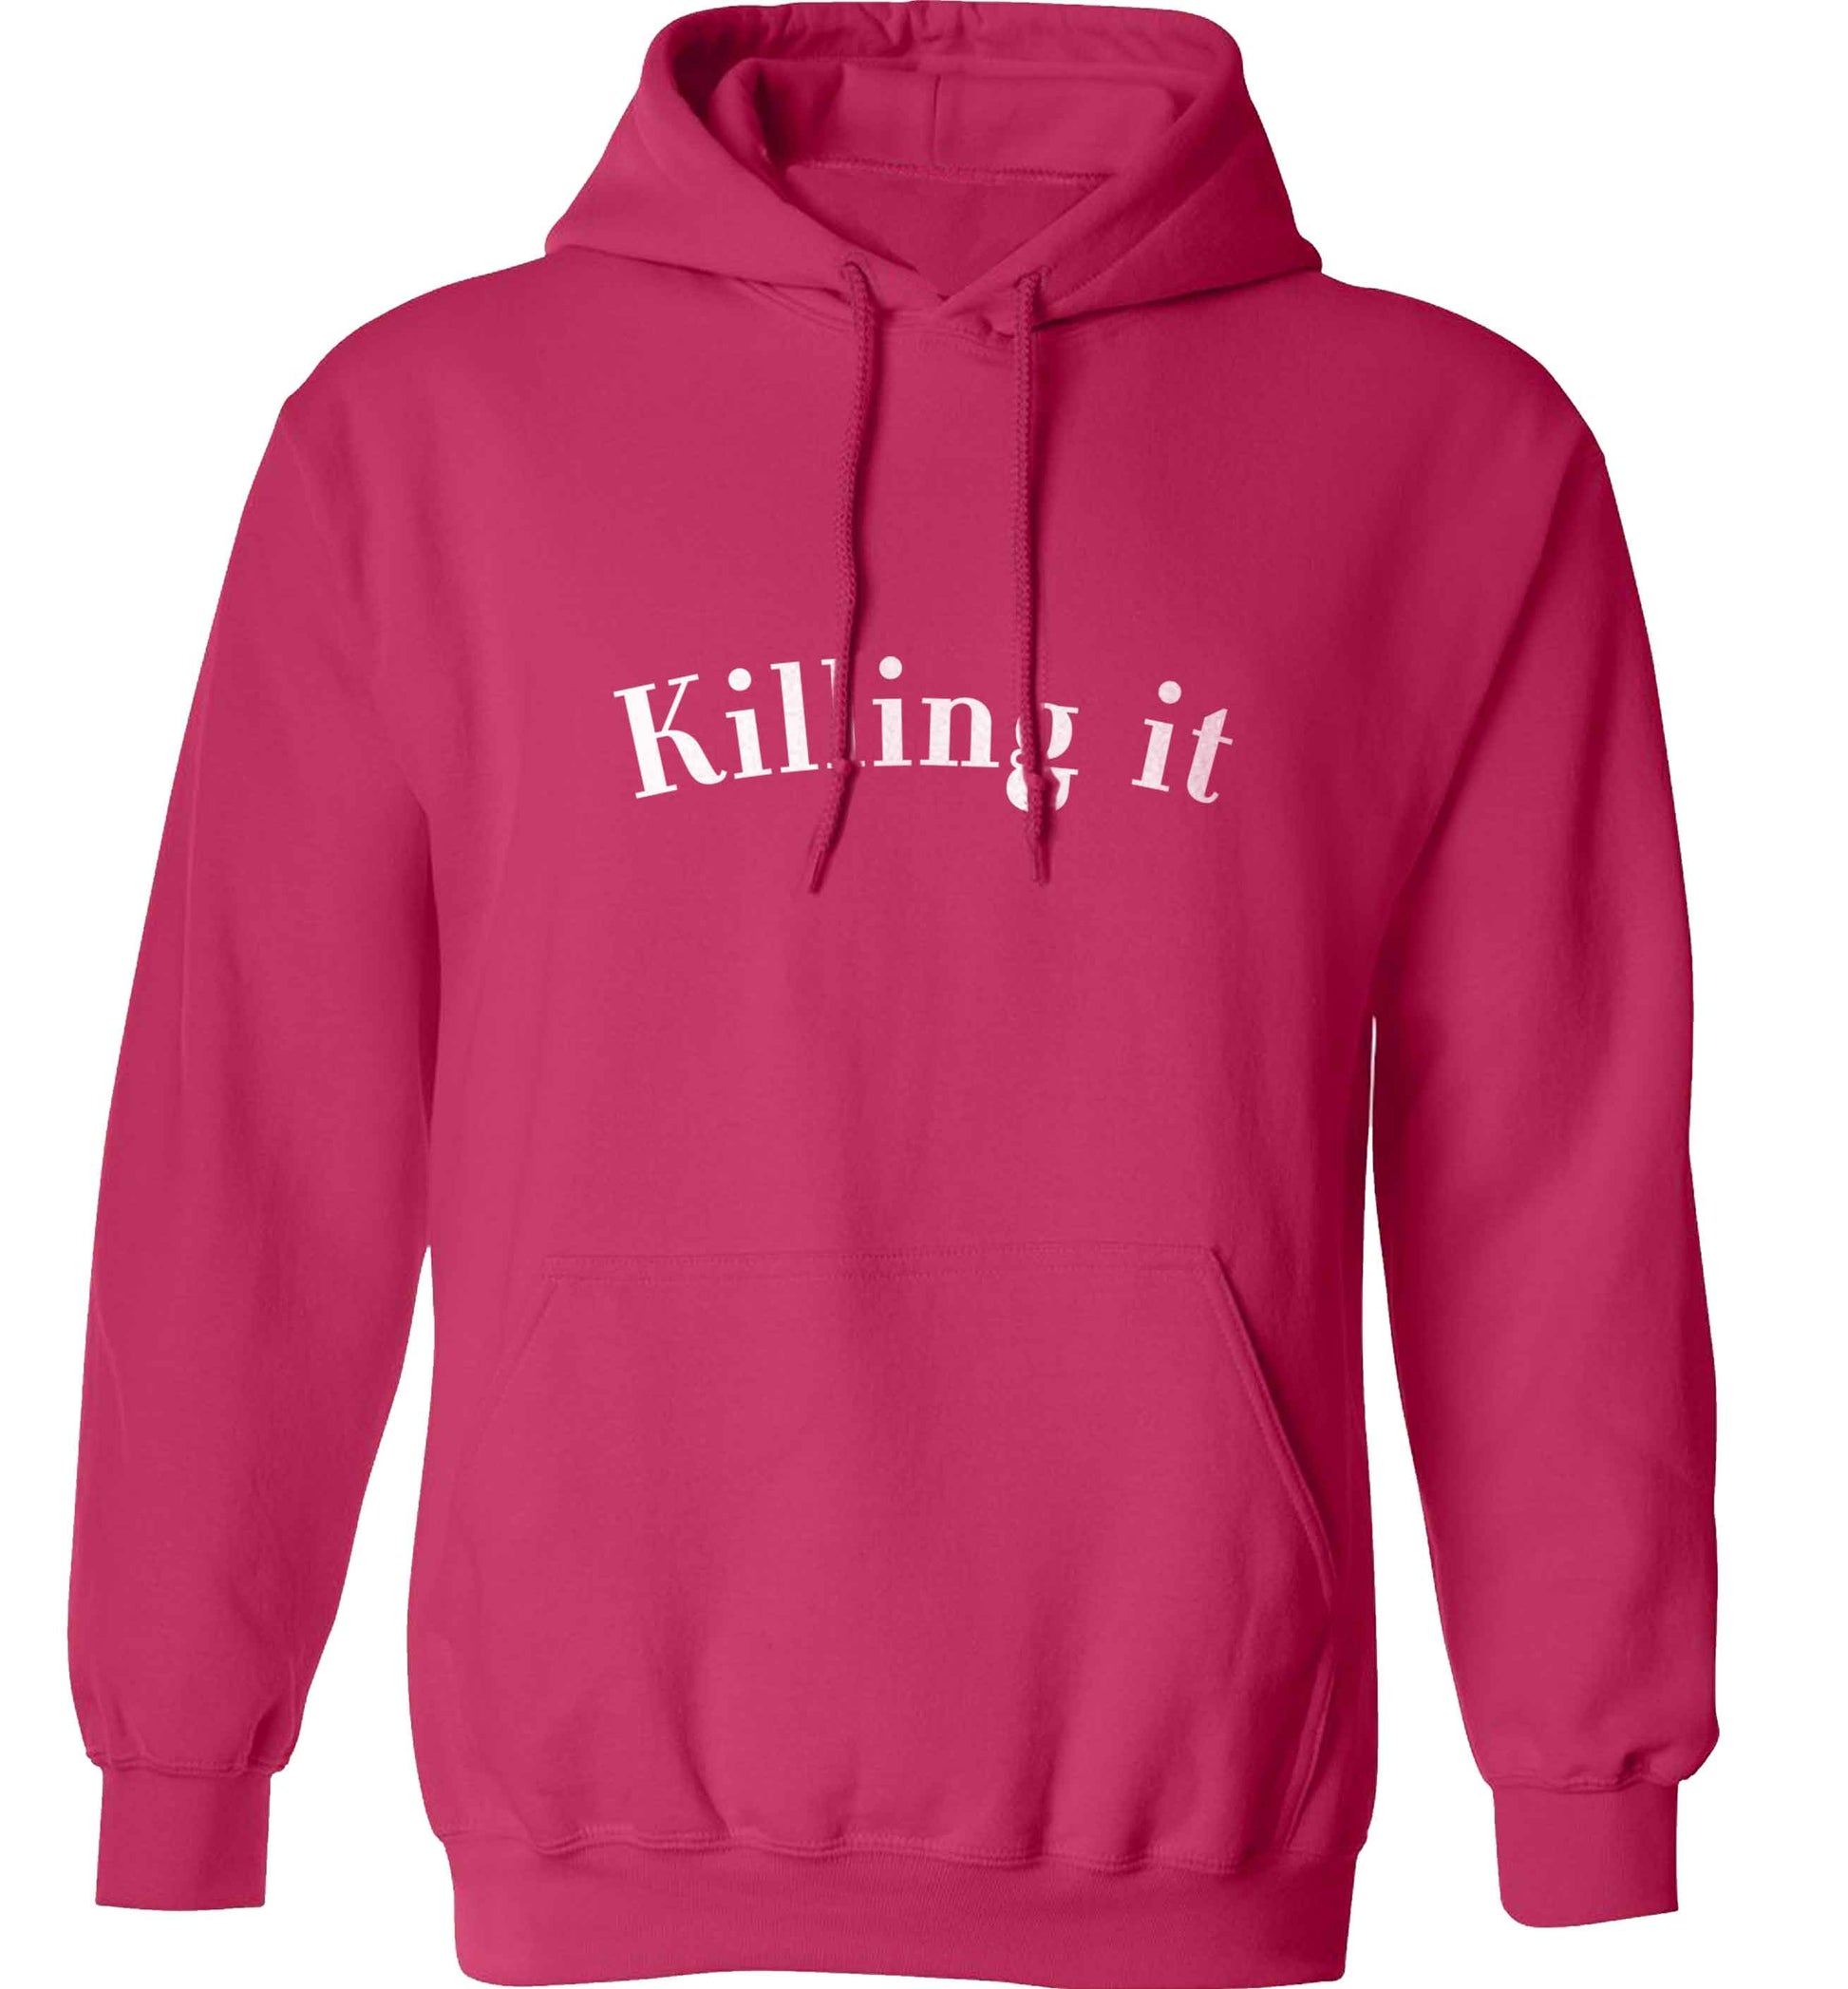 Killing it adults unisex pink hoodie 2XL